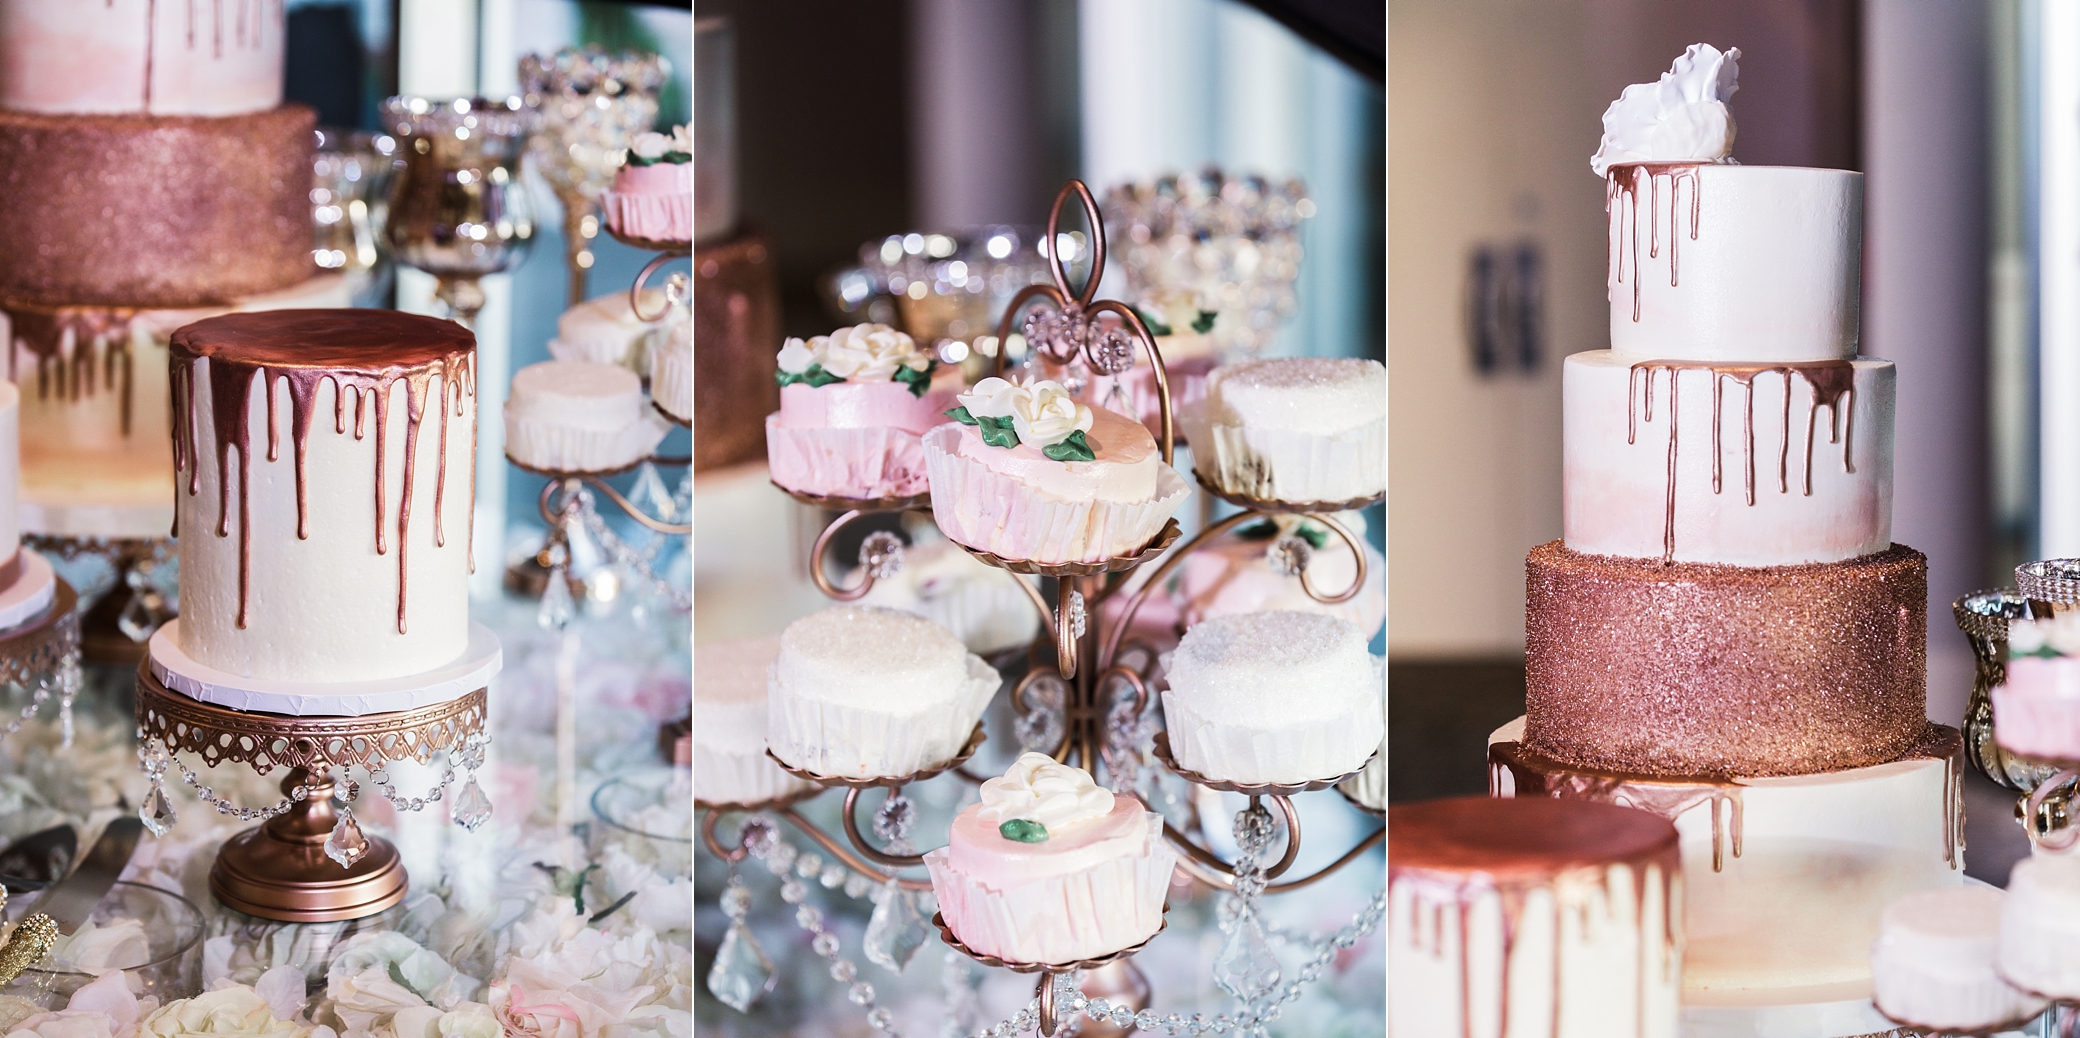 Celebrity Cake Studio Wedding Display | Megan Montalvo Photography